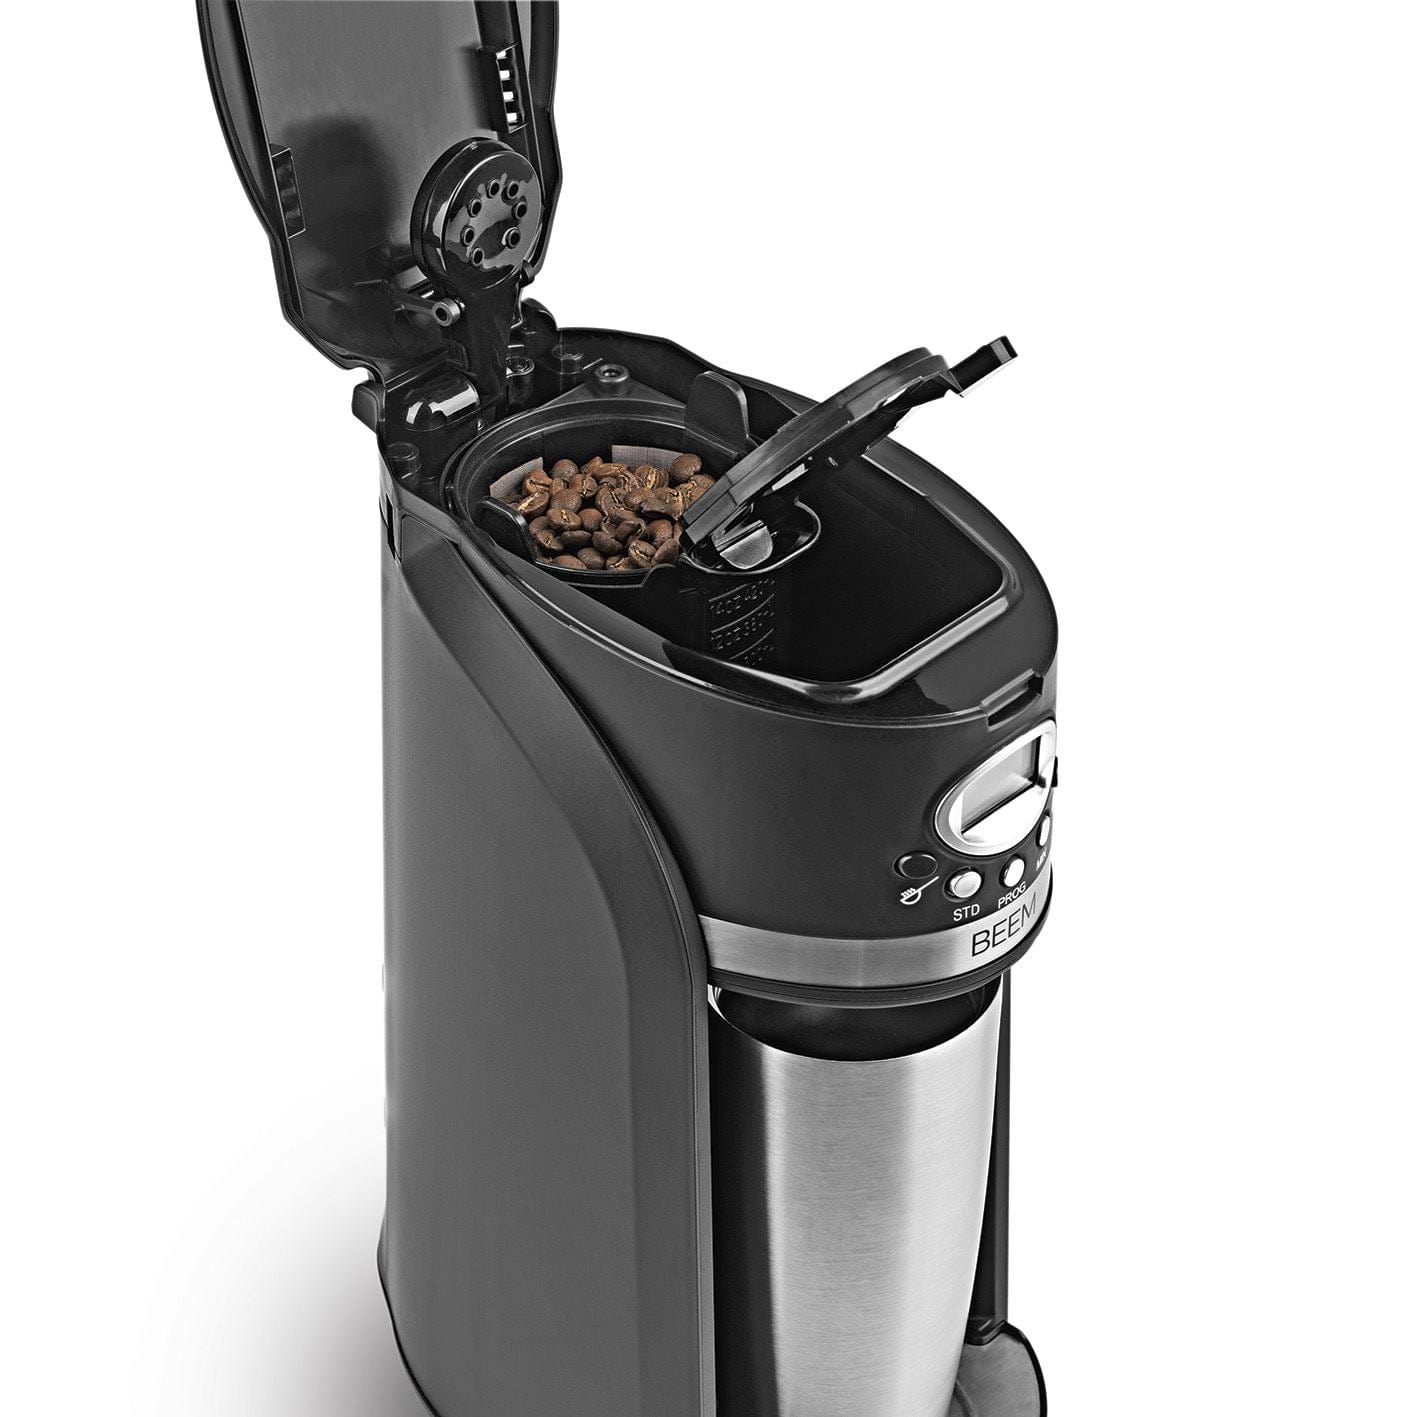 GRIND & BREW 2 GO Single Filter Coffee Machine with Grinder